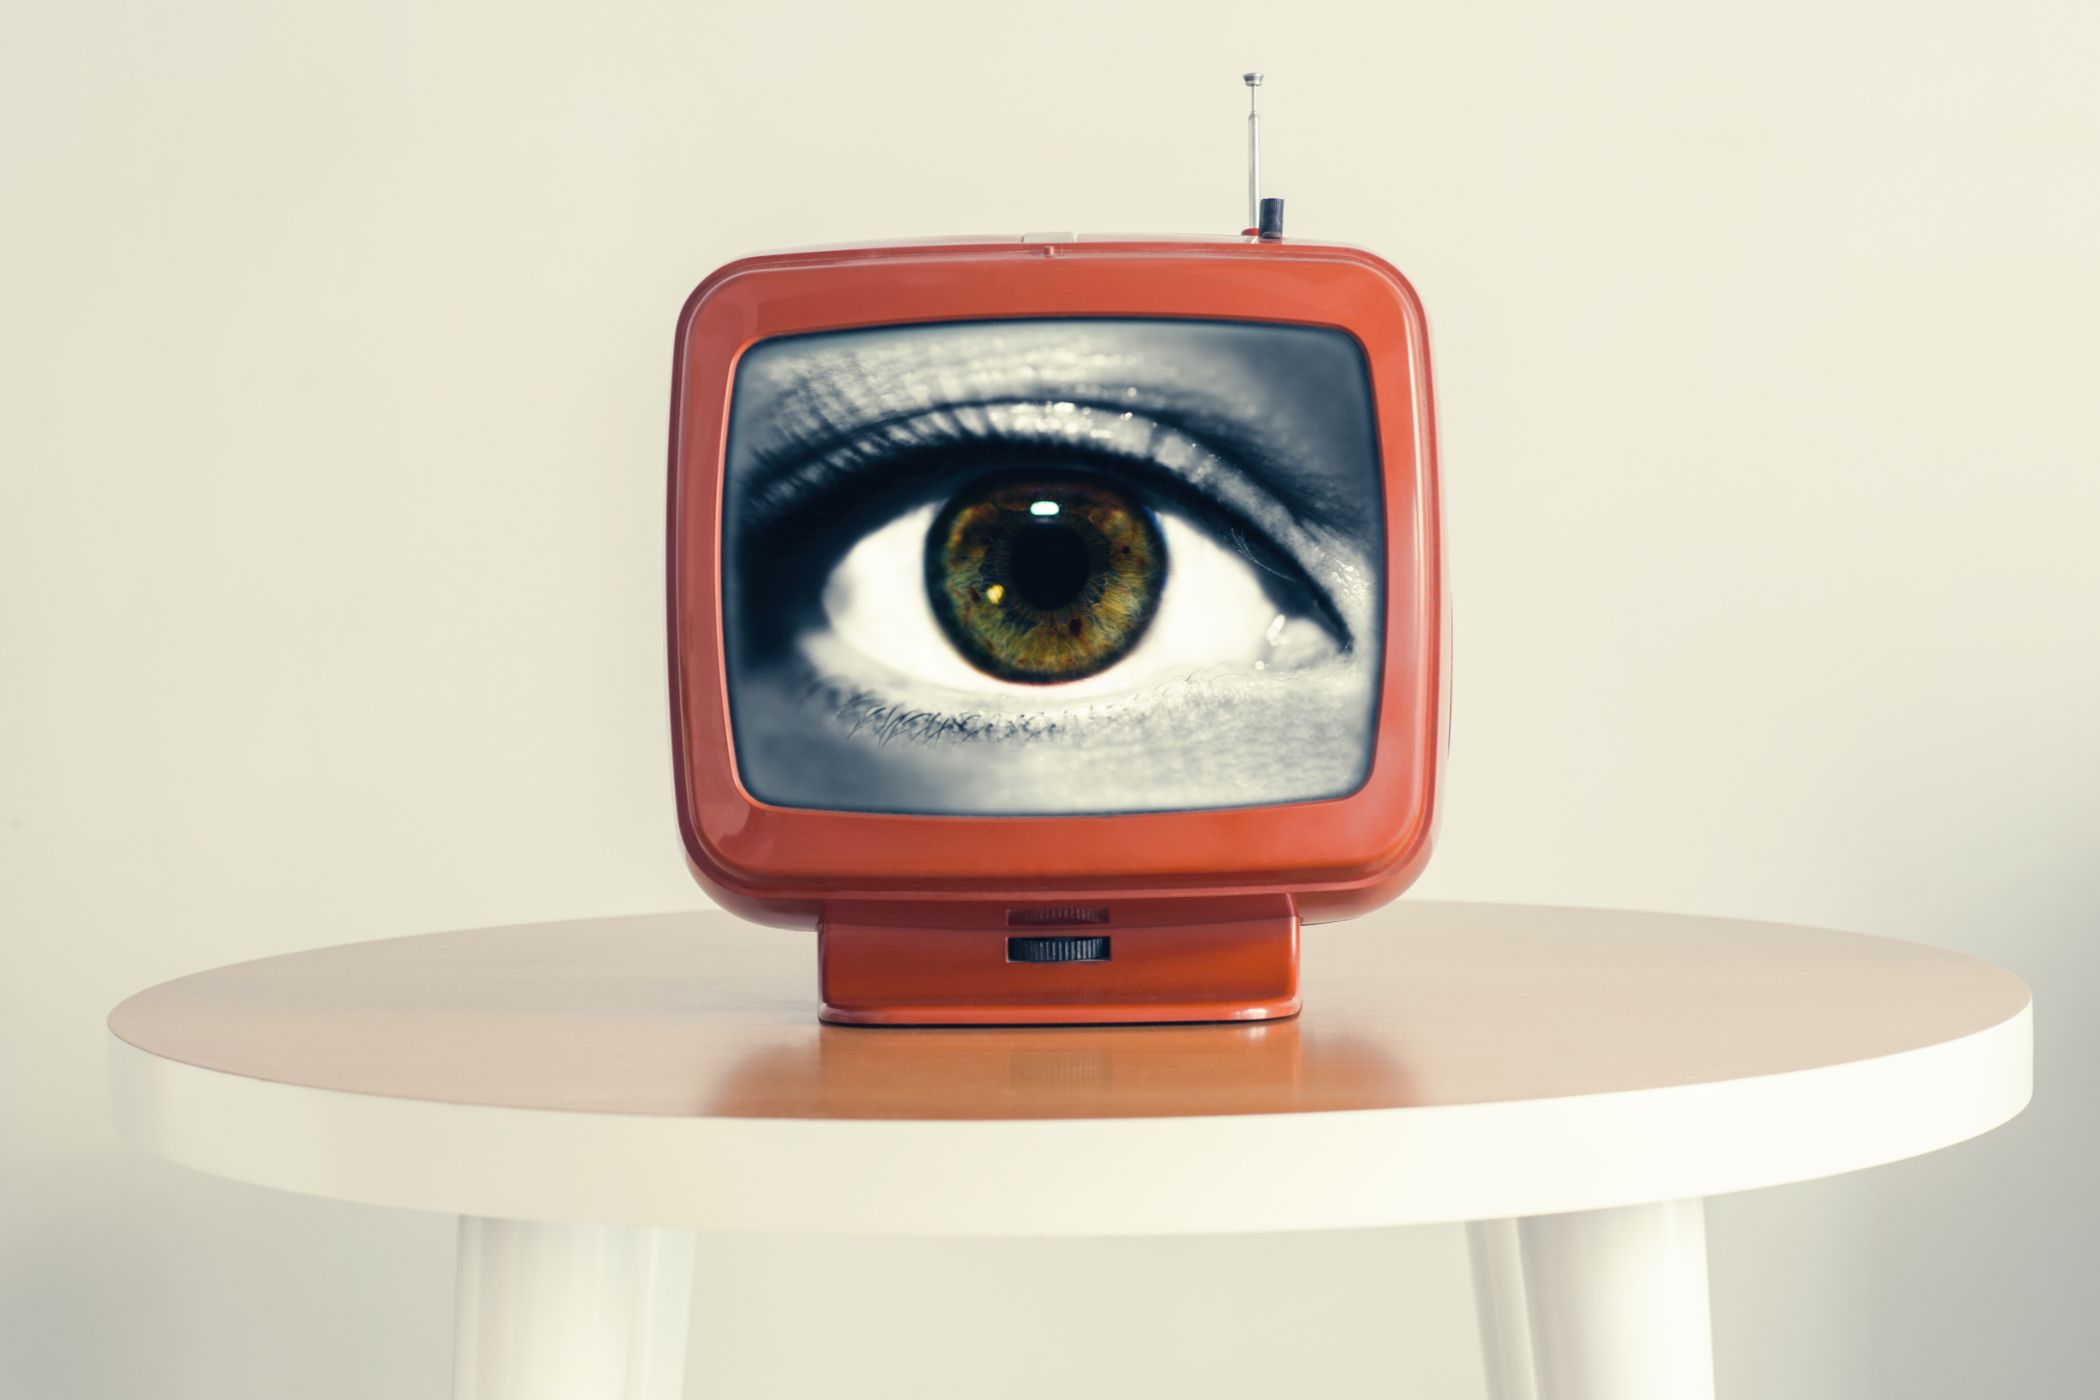 An eye in an old retro TV screen, always watching.